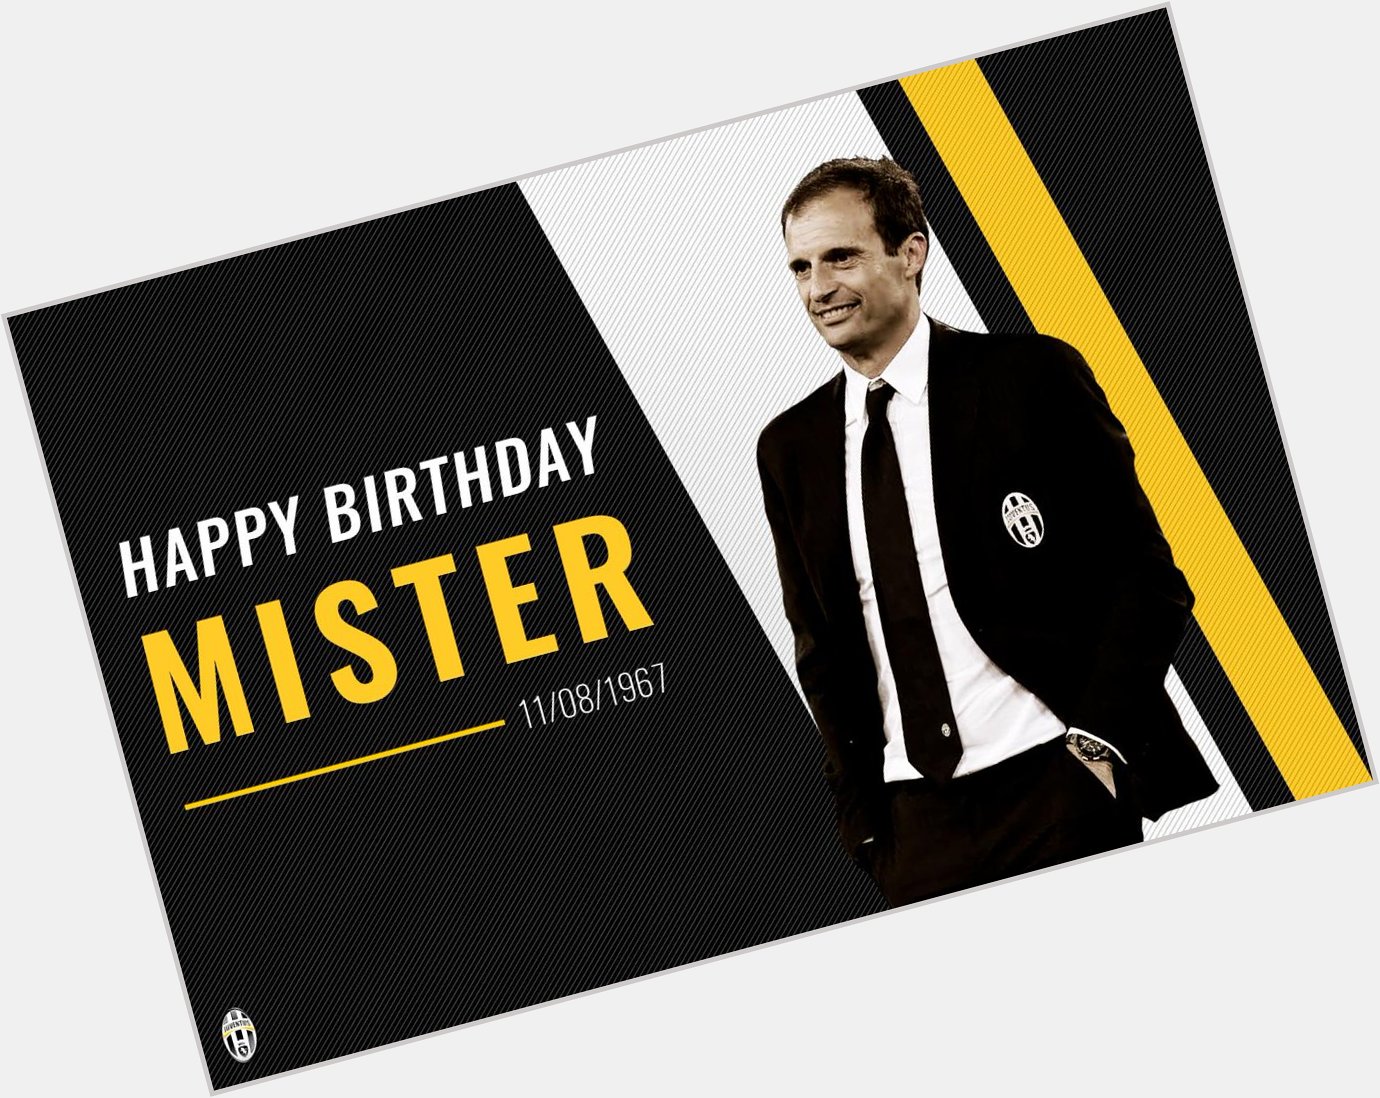 Team:Happy Birthday, Max!: Juventus boss Massimiliano Allegri celebrates his 48th birthday 